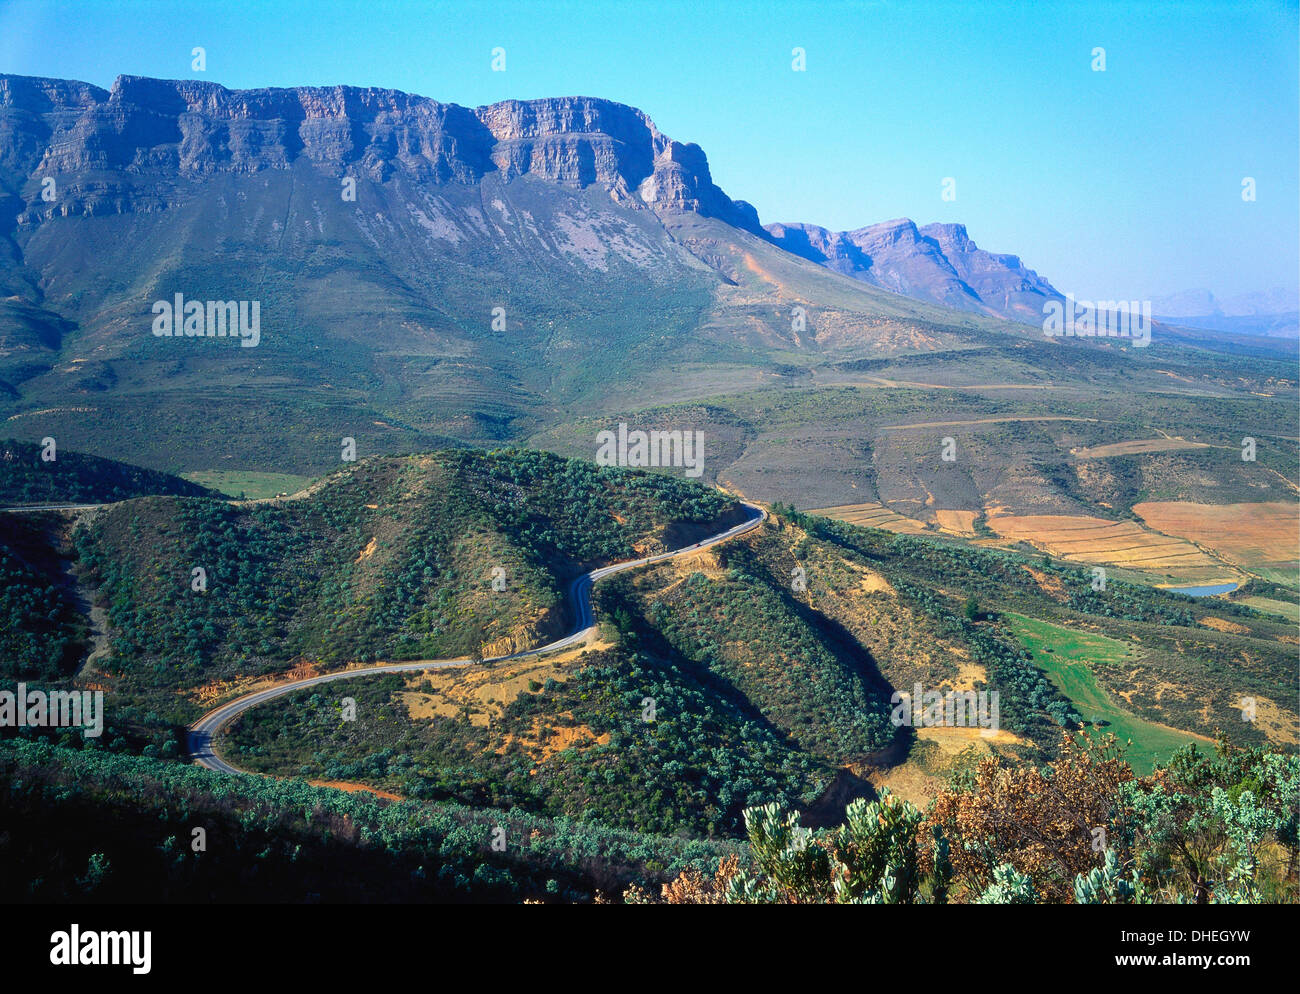 Pase Uitkyk, Valle de Ceres, Western Cape, Sudáfrica Foto de stock